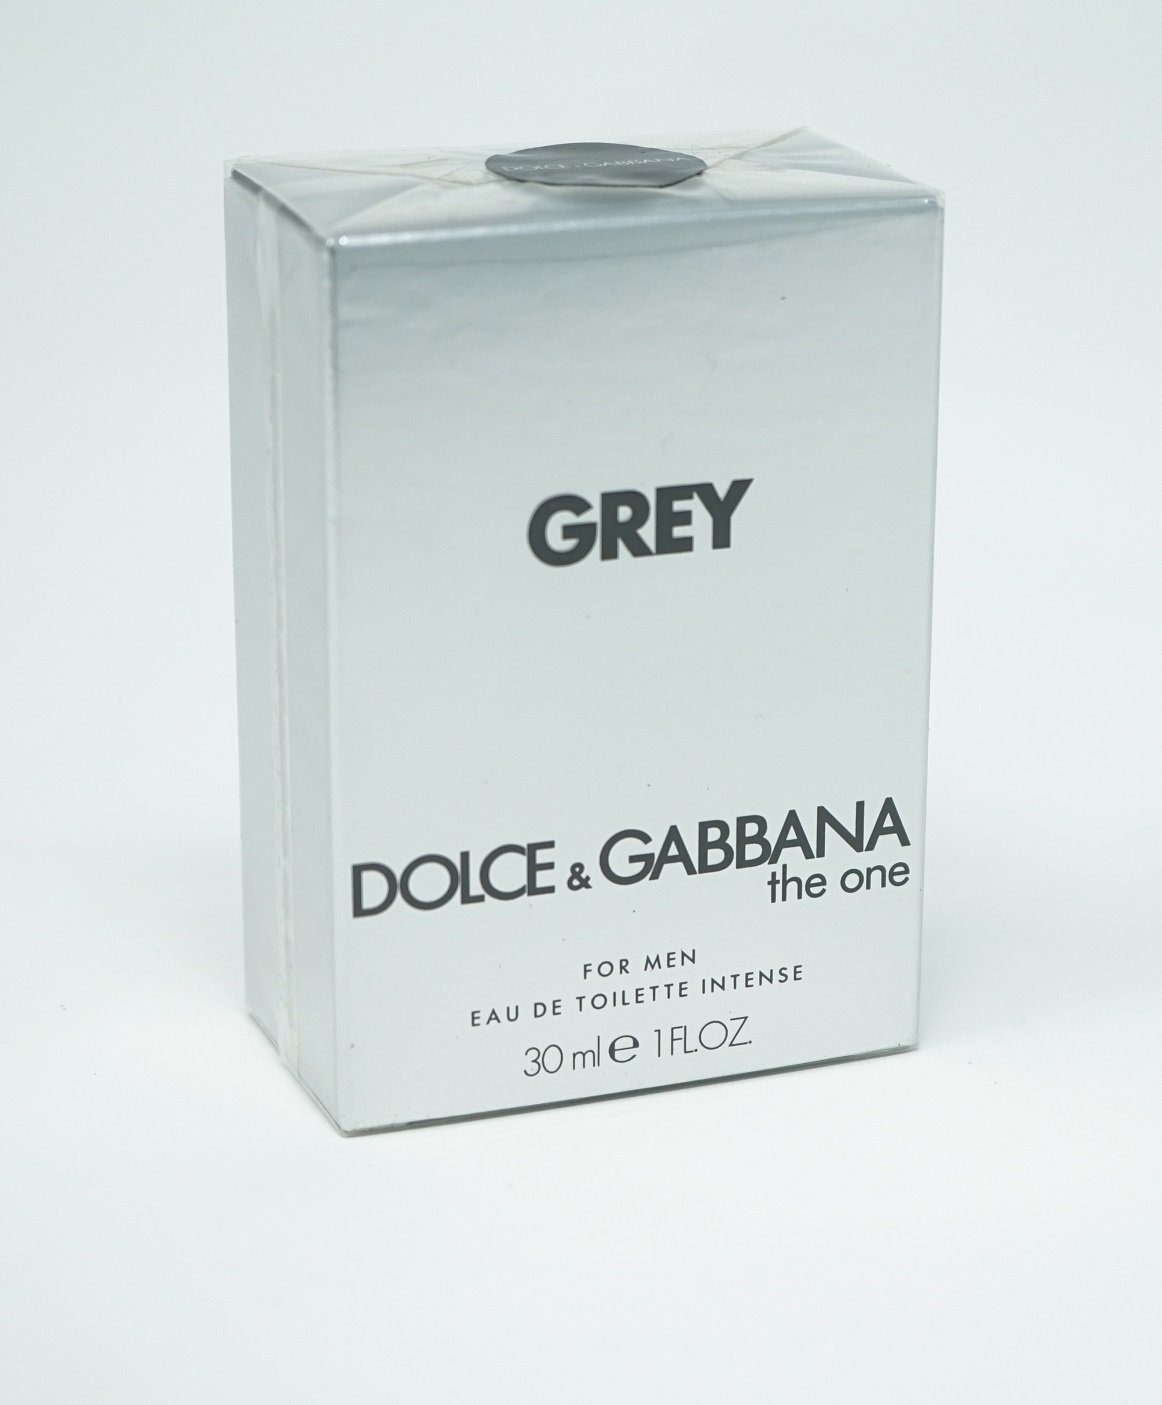 de Dolce DOLCE The GABBANA One & de Toilette Gabbana 30ml Eau Toilette Grey Intense & Eau